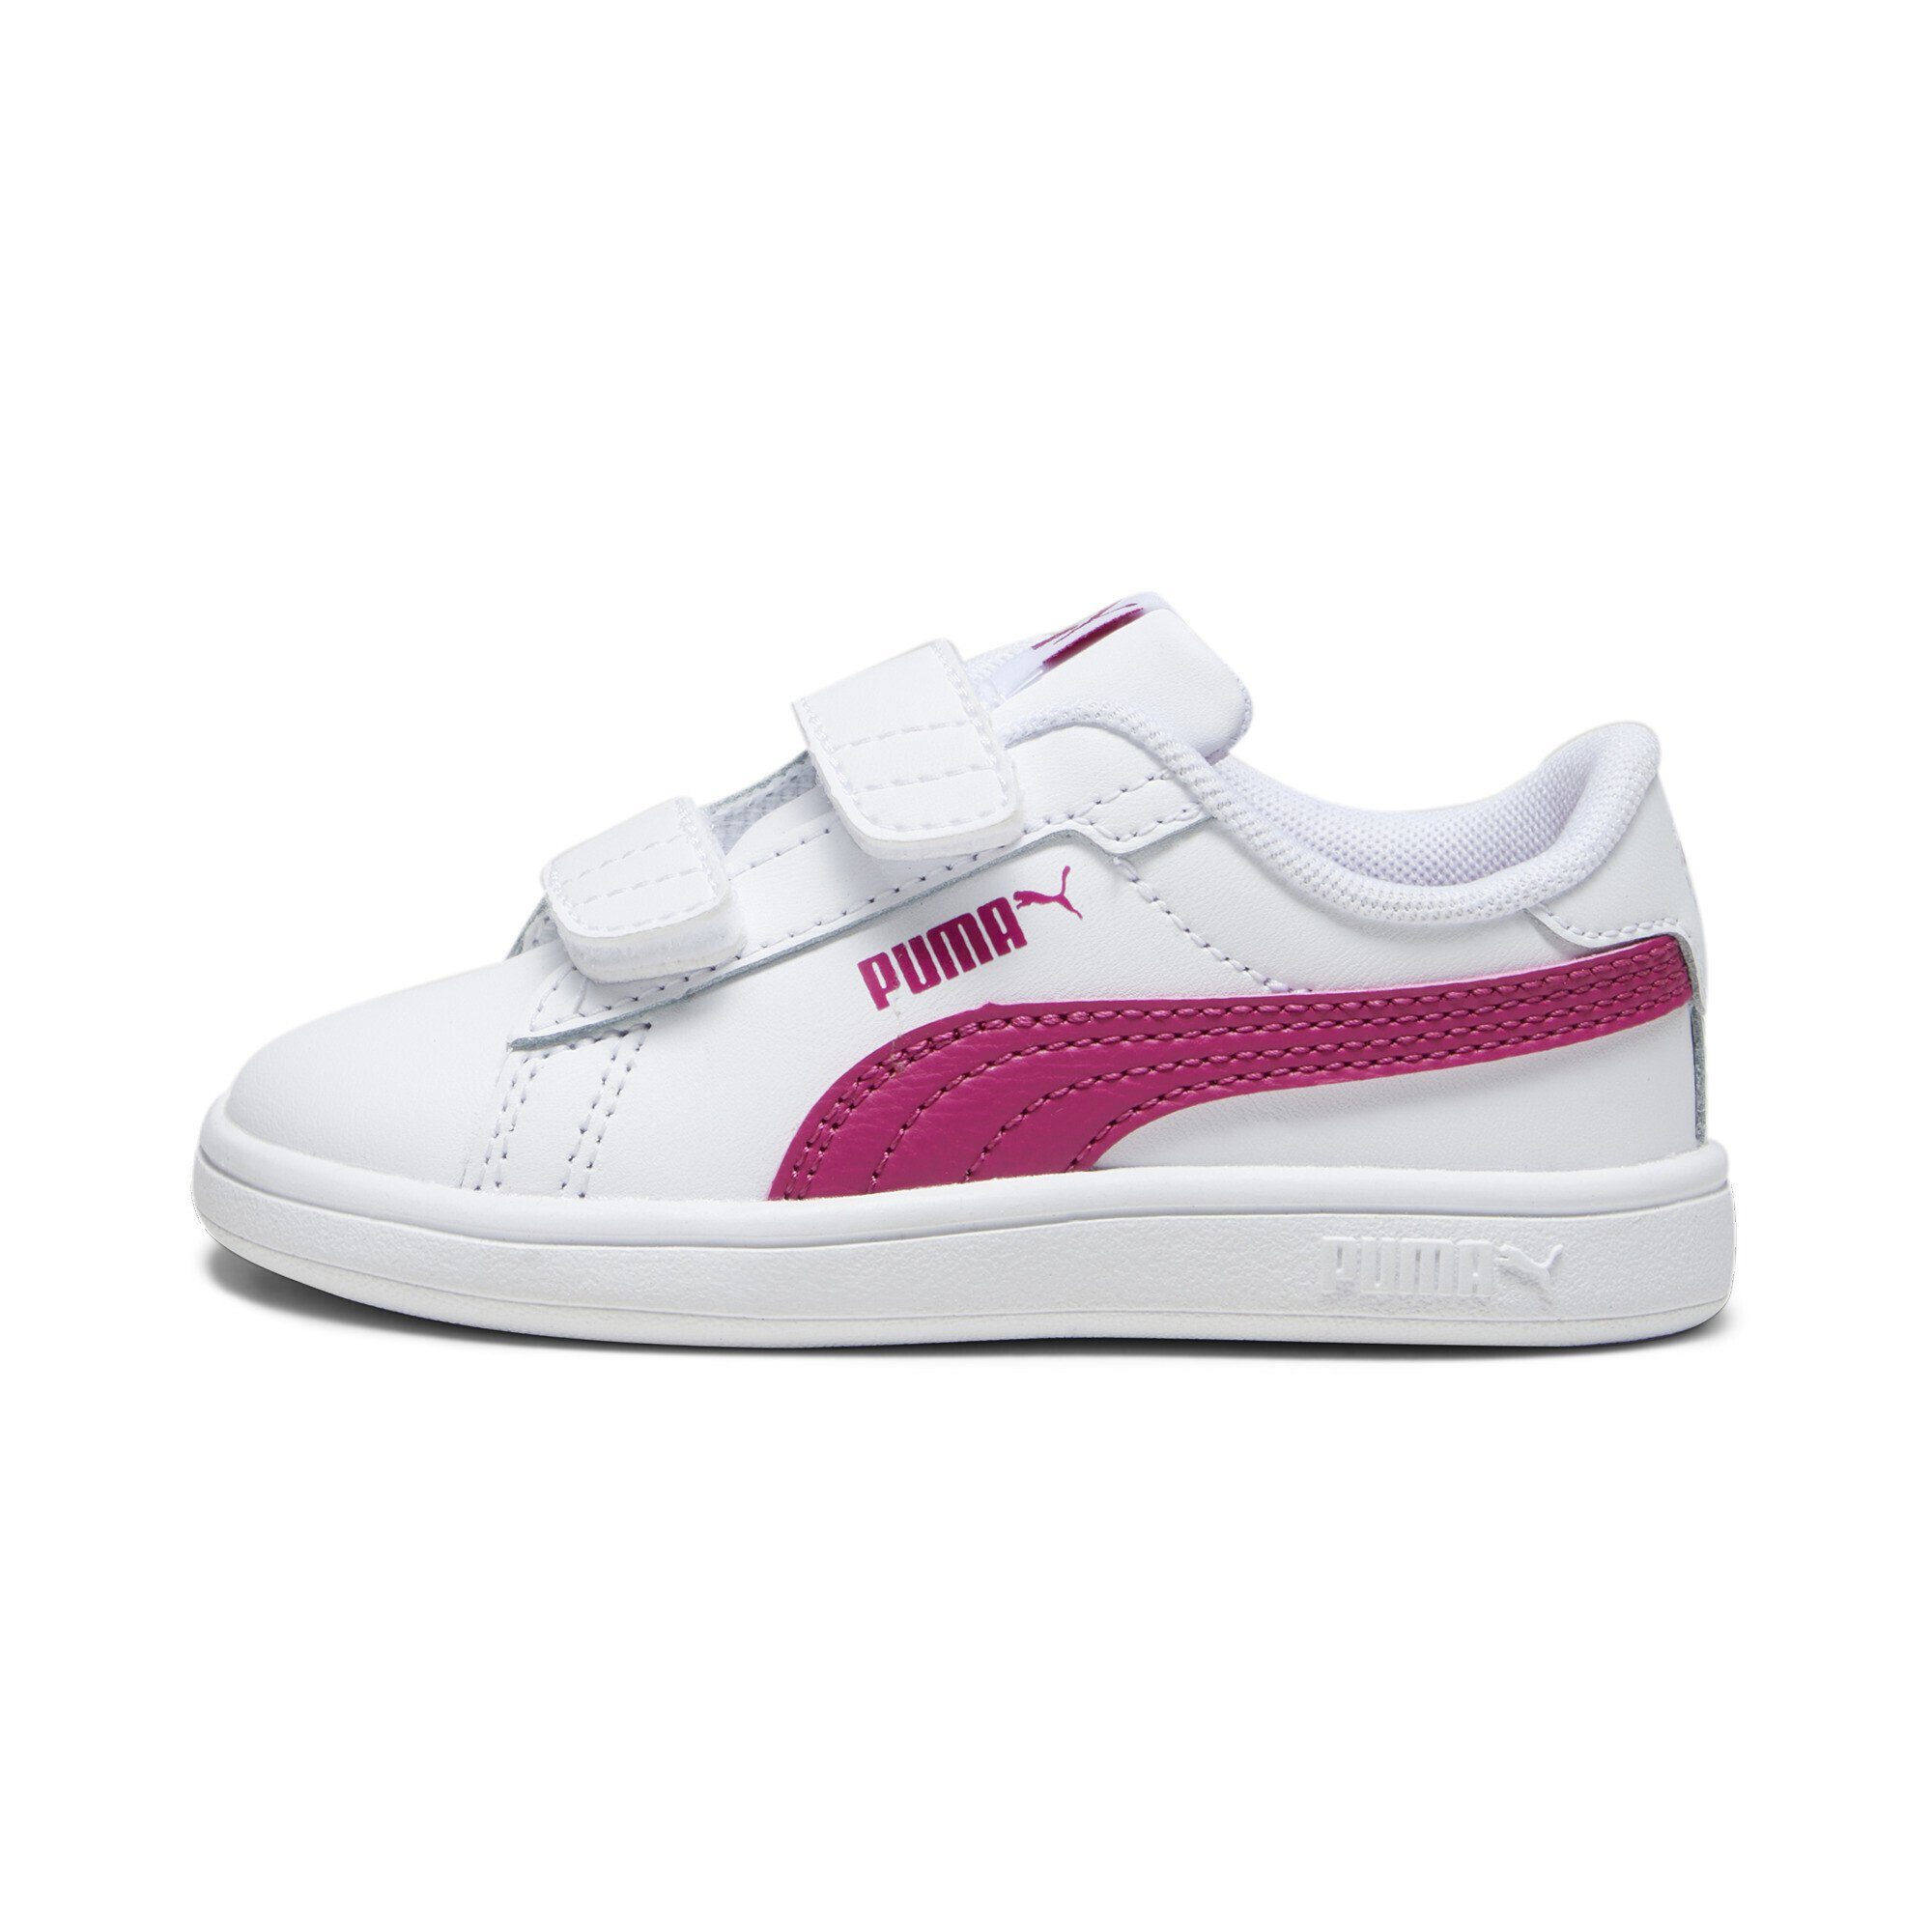 Kinder V 3.0 Pink Leather Smash Pinktastic Sneakers PUMA Sneaker White